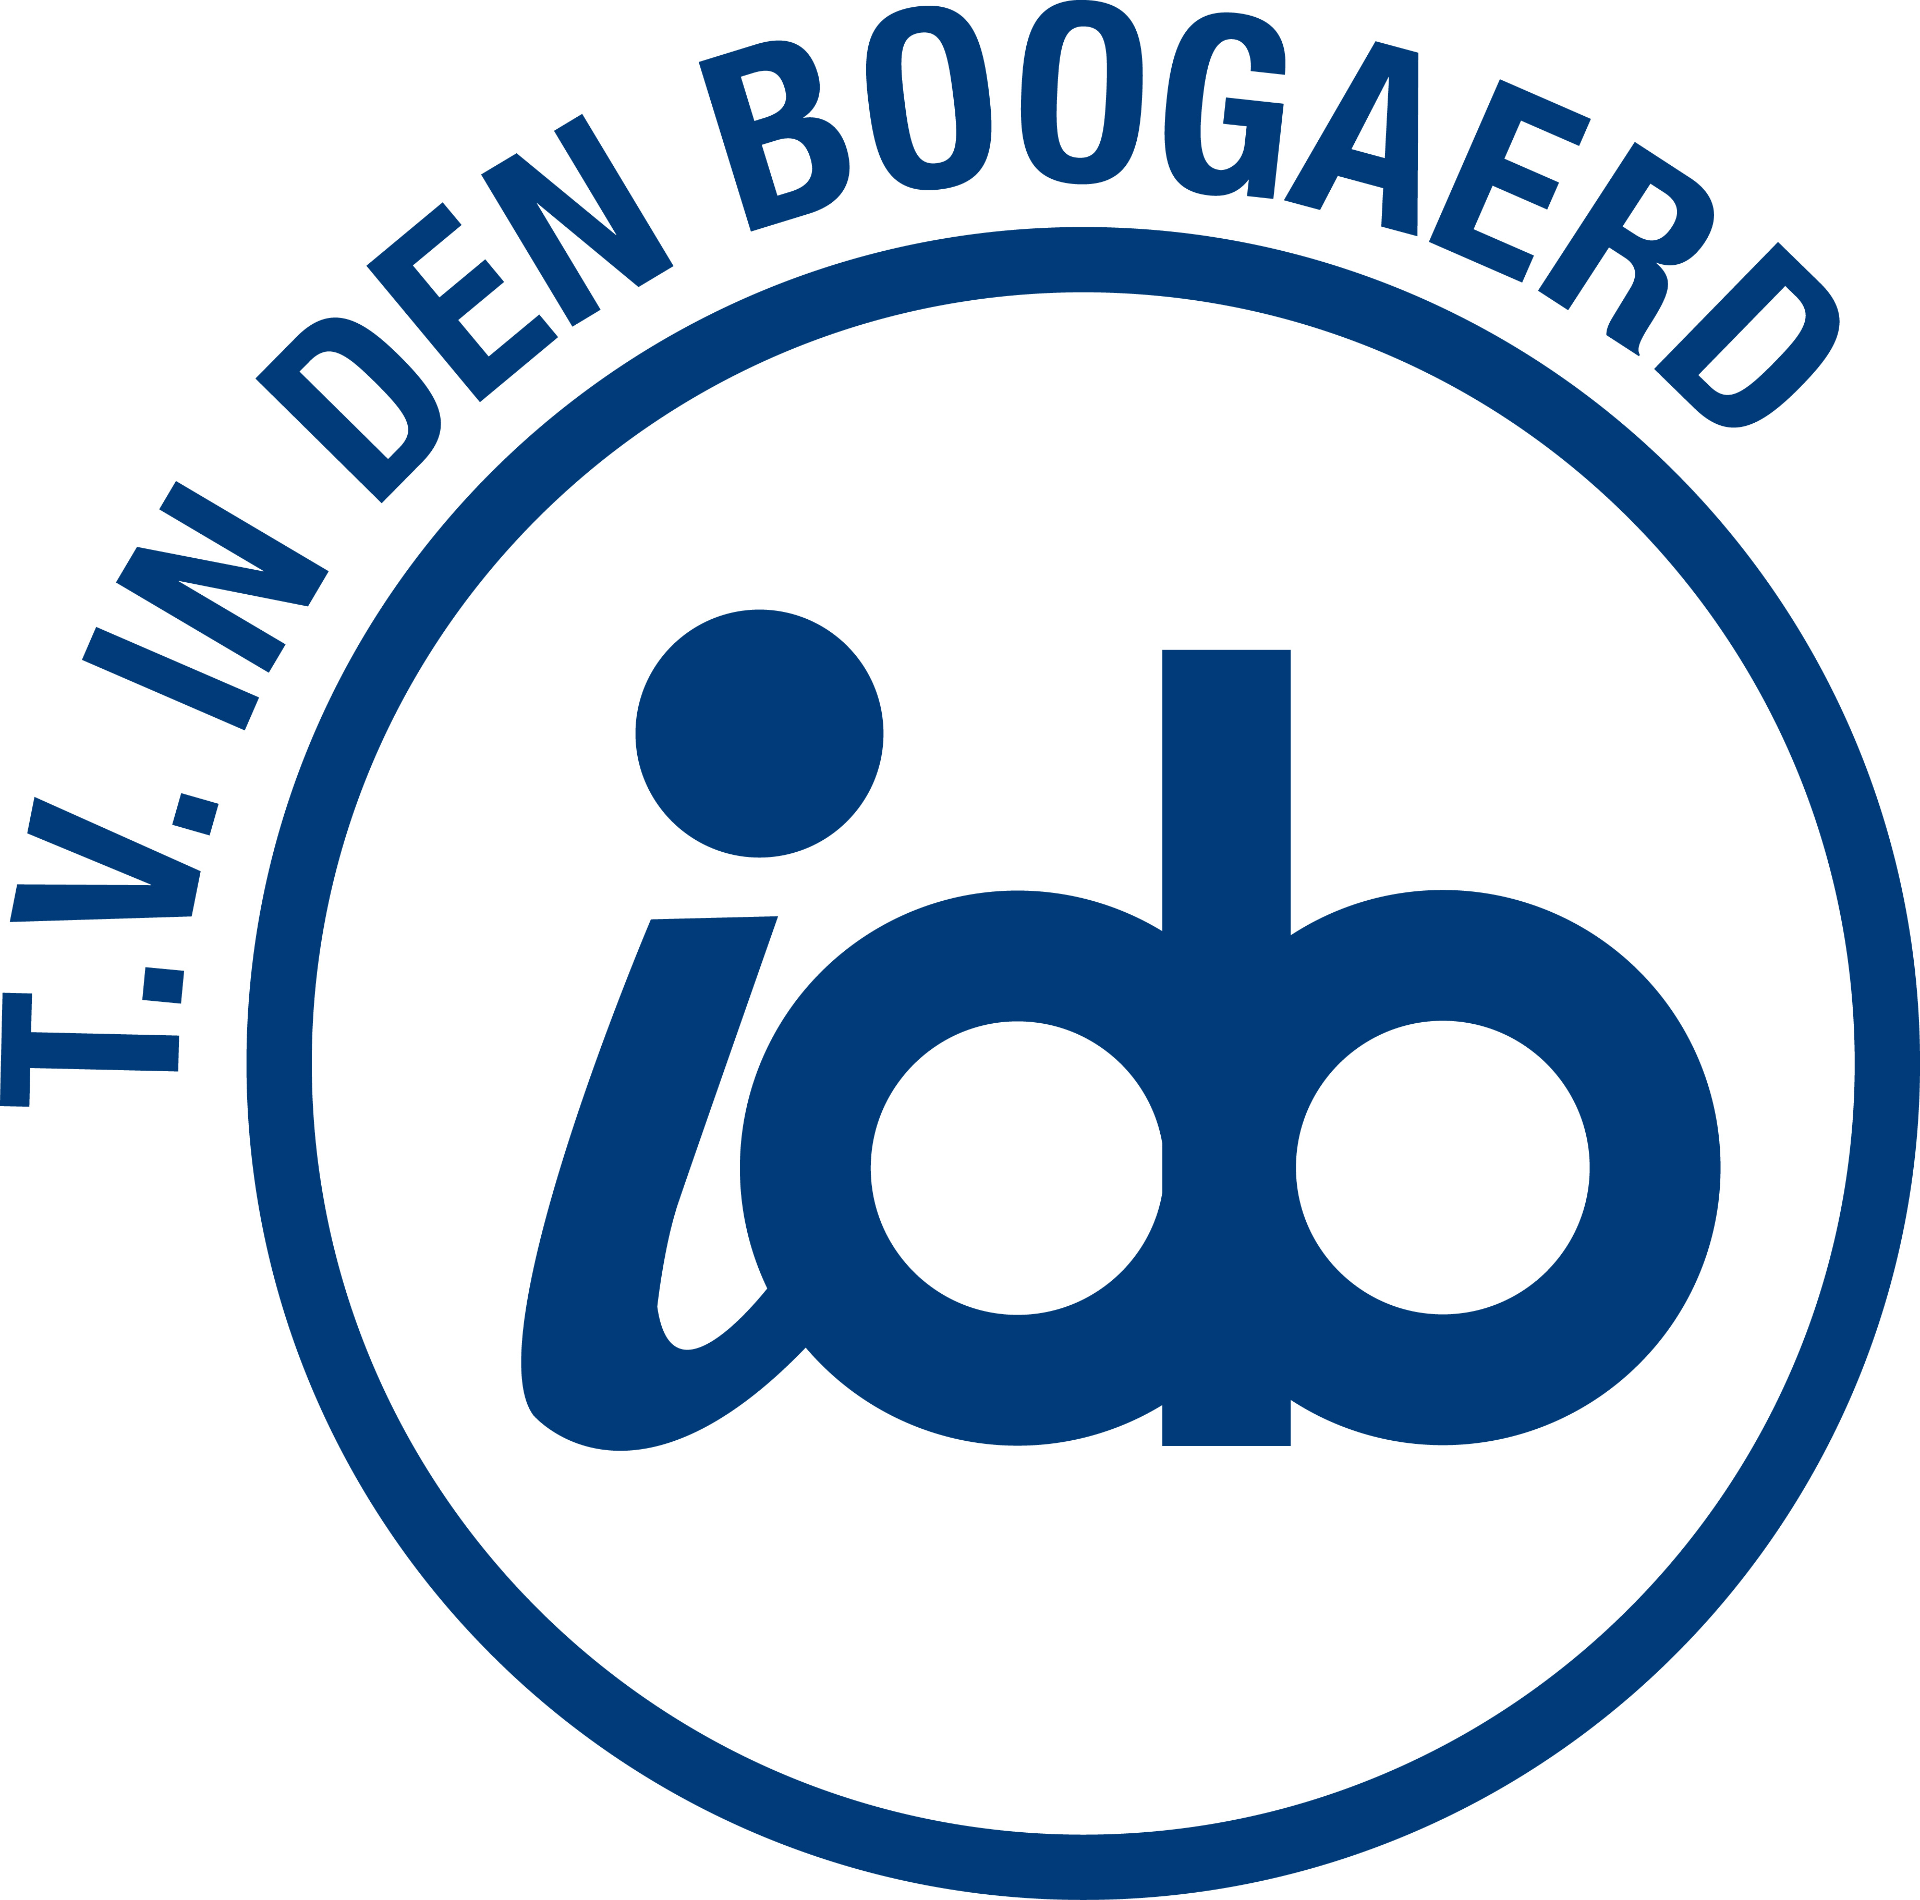 Profile image of venue TV In den Boogaerd